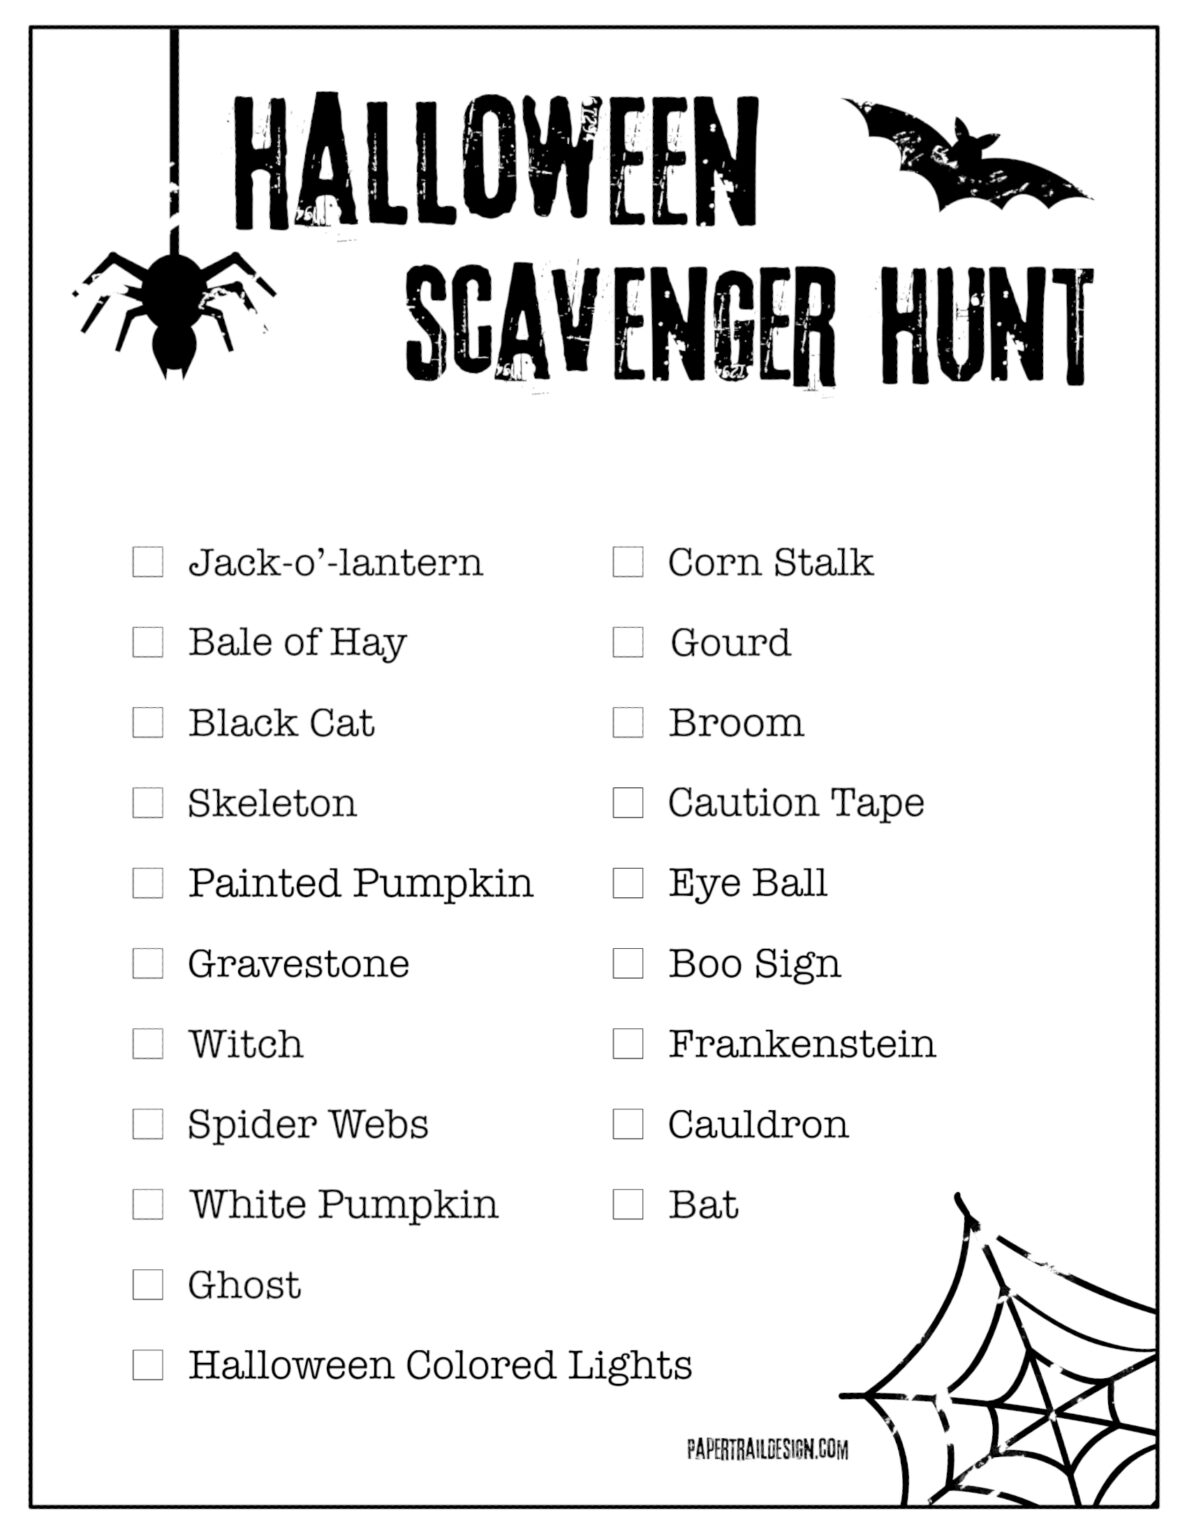 free-printable-halloween-scavenger-hunt-list-paper-trail-design